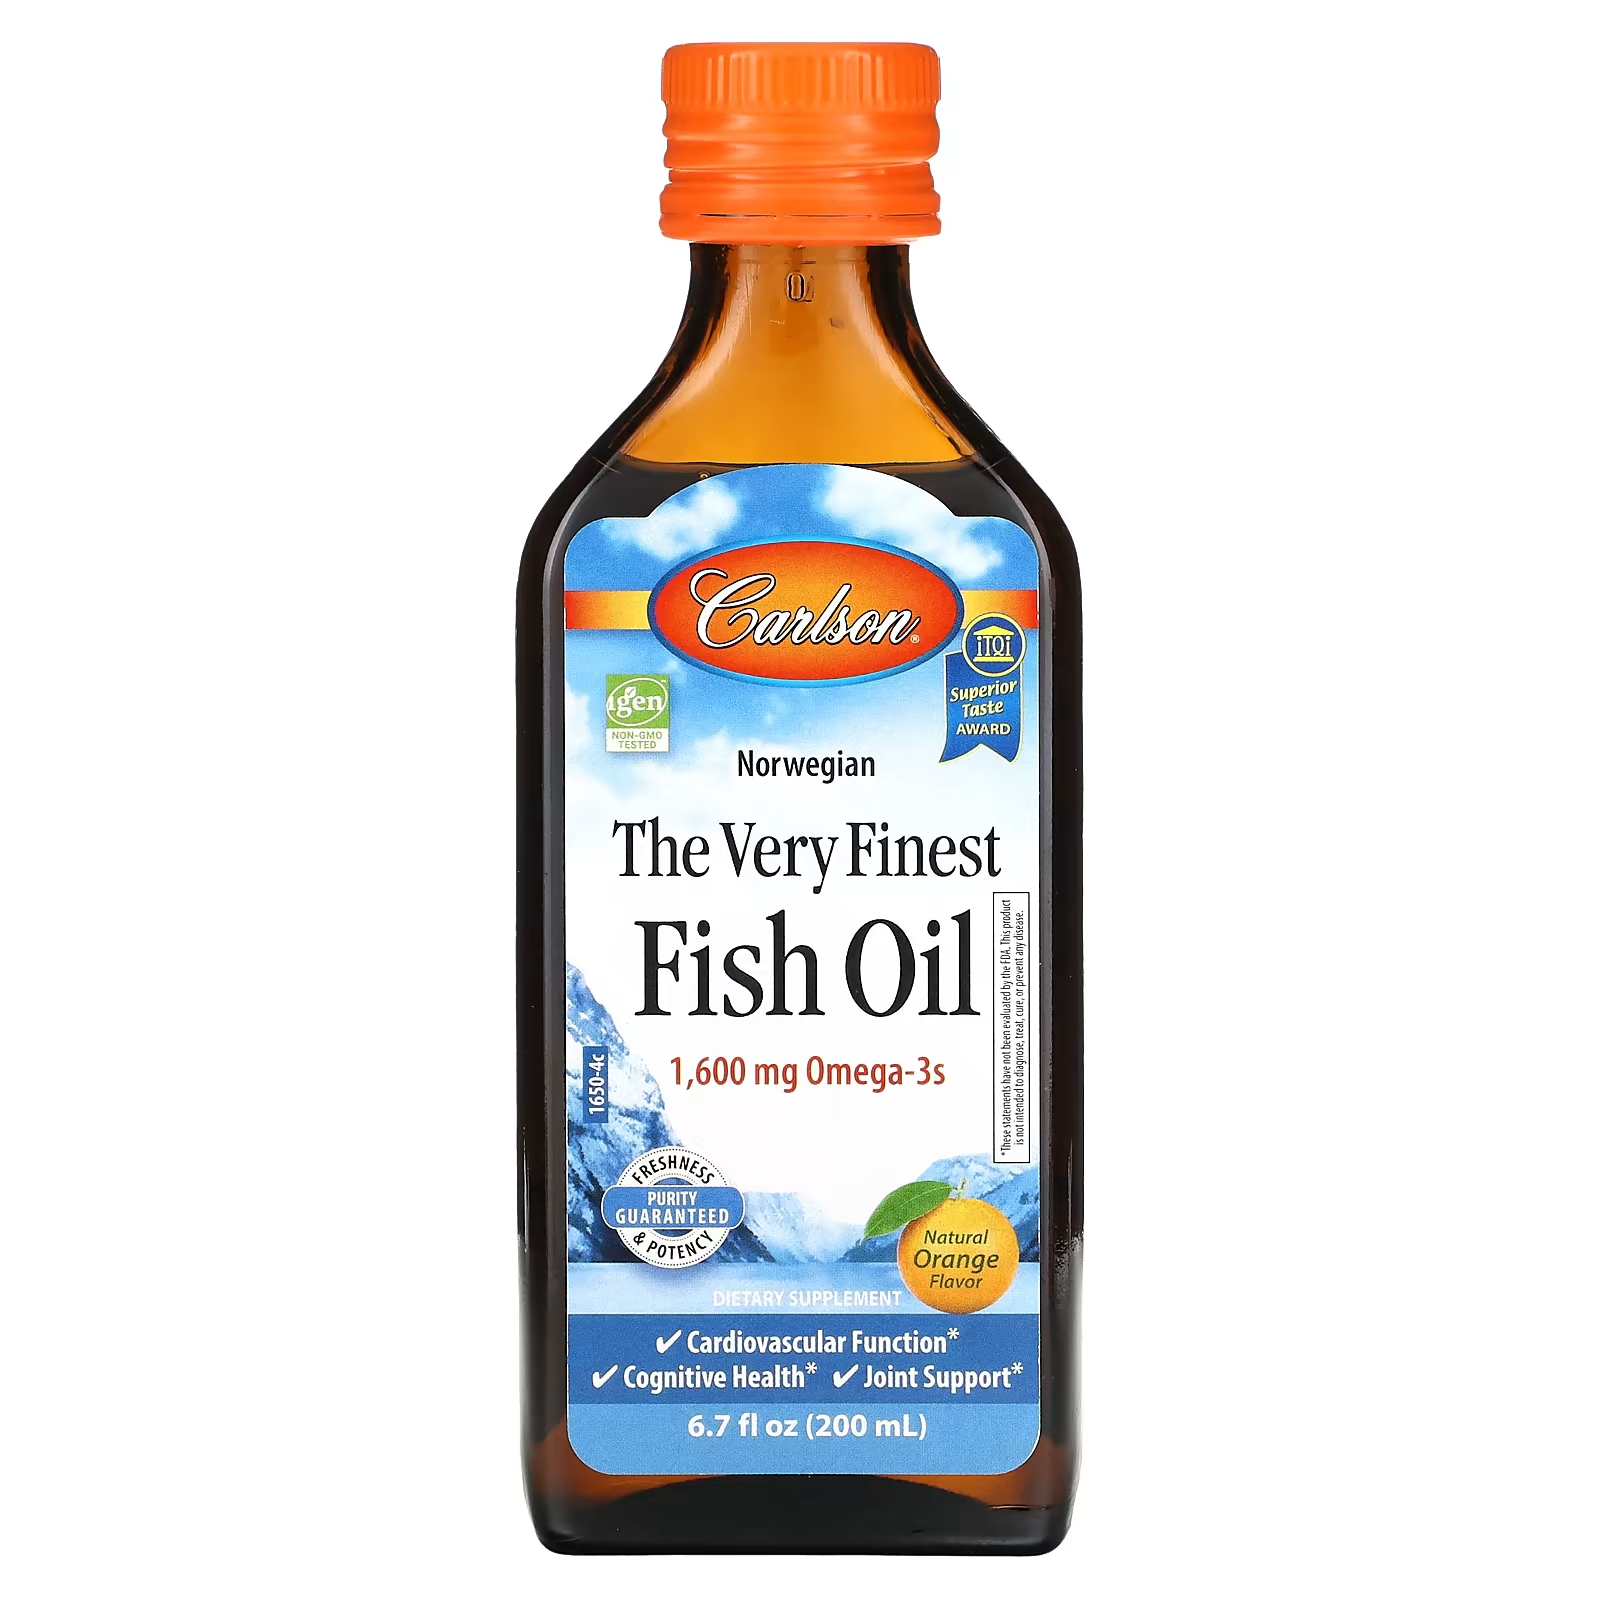 Пищевая добавка Carlson The Very Finest Fish Oil Natural Orange, 200 мл carlson kids the very finest fish oil natural mixed berry 800 mg 6 7 fl oz 200 ml